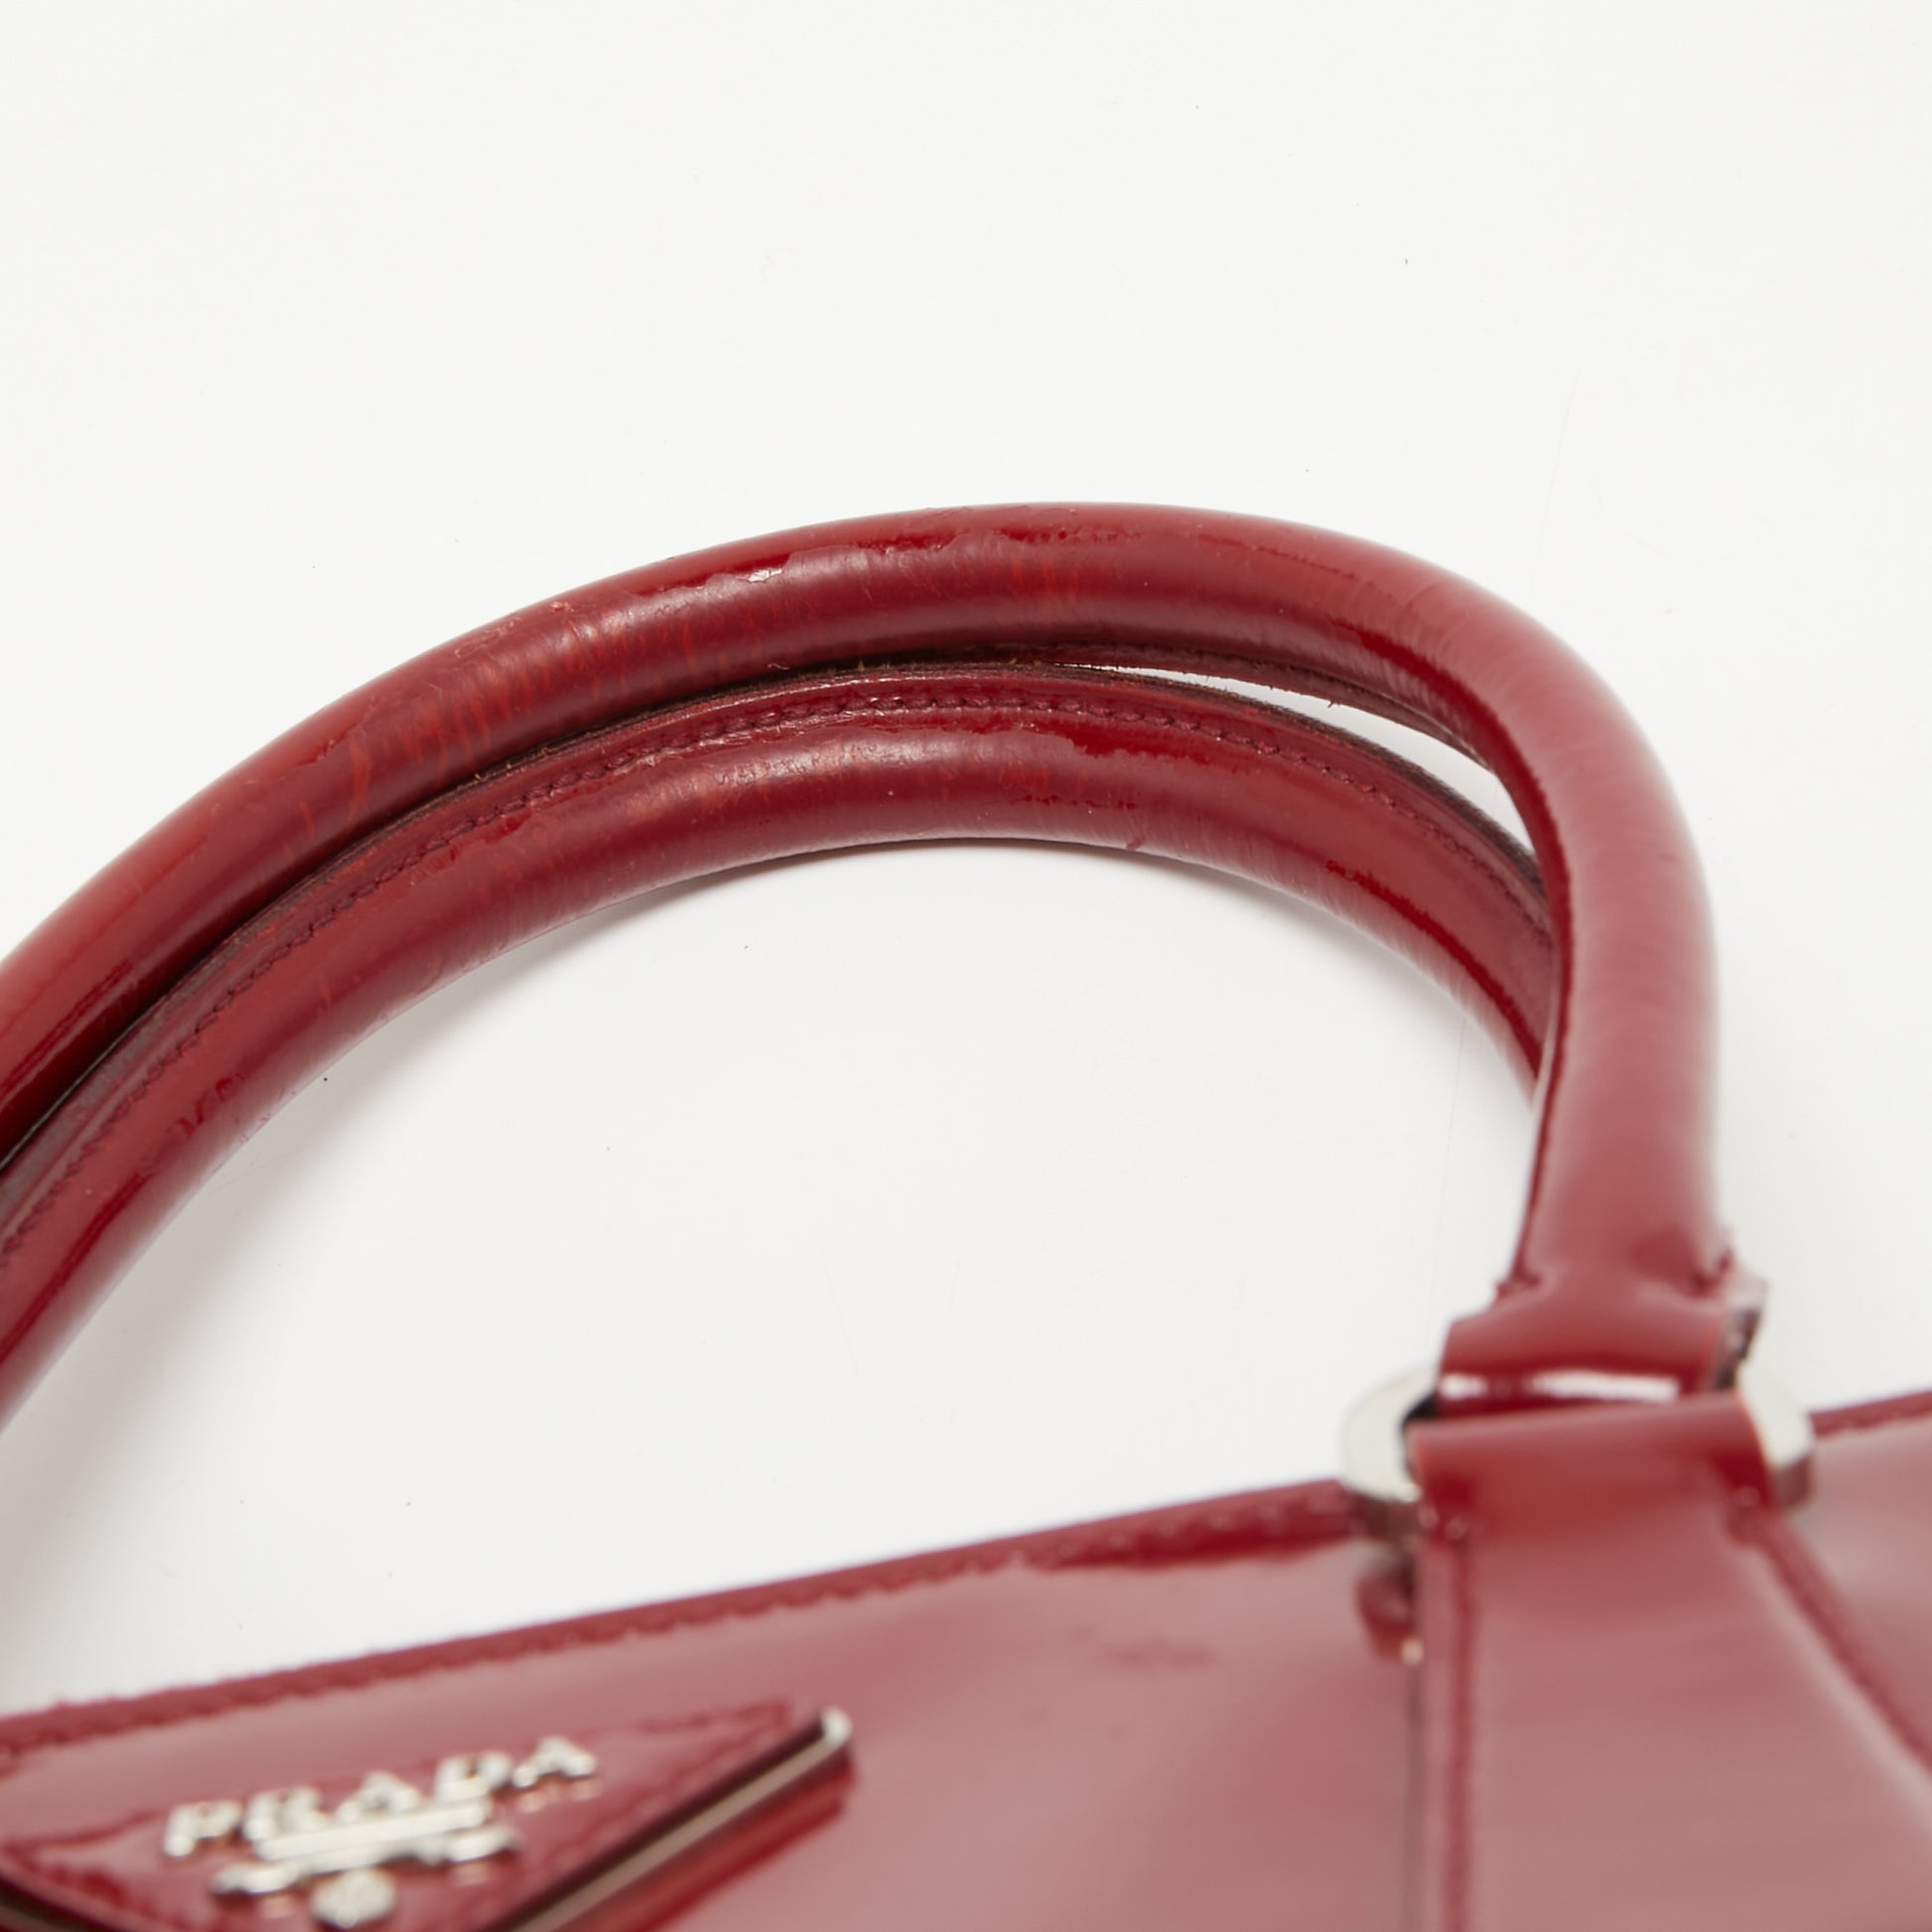 Prada Patent Calf Leather Handbag